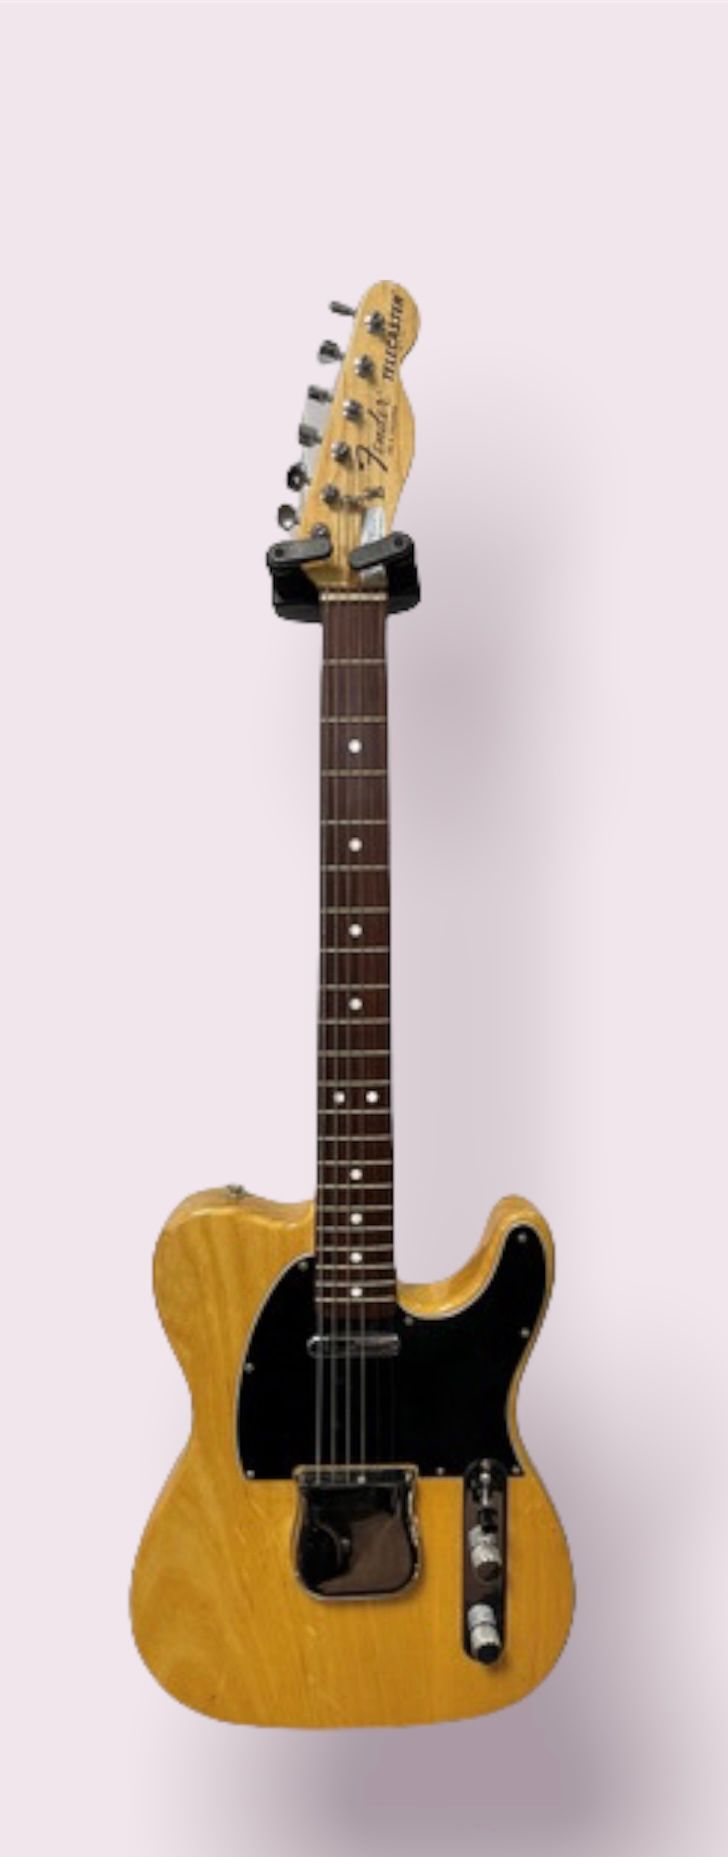 Null 电吉他，FENDER Telecaster

上过清漆的金丝楠木，编号S852360

(划痕)

带箱子